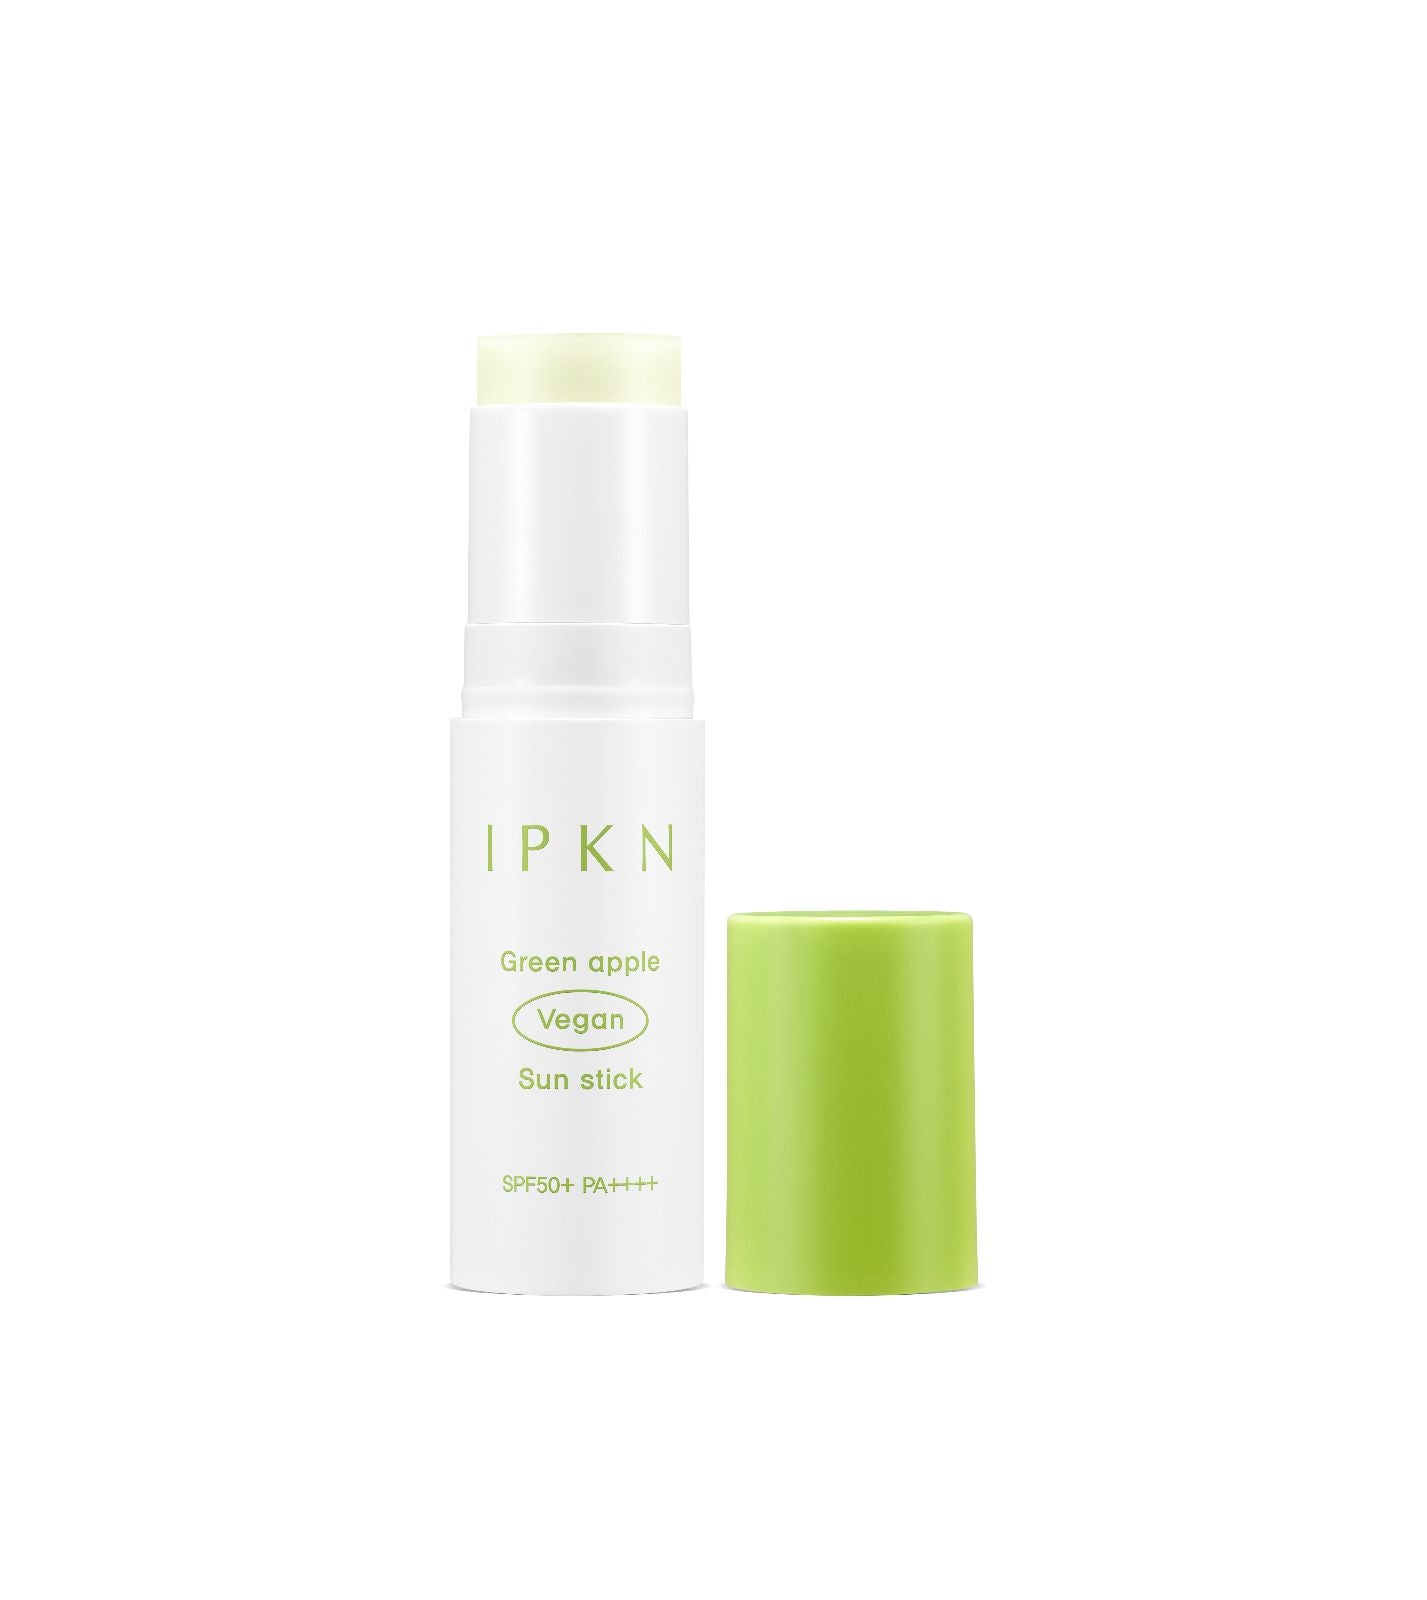 IPKN - Green Apple Vegan Sun Stick